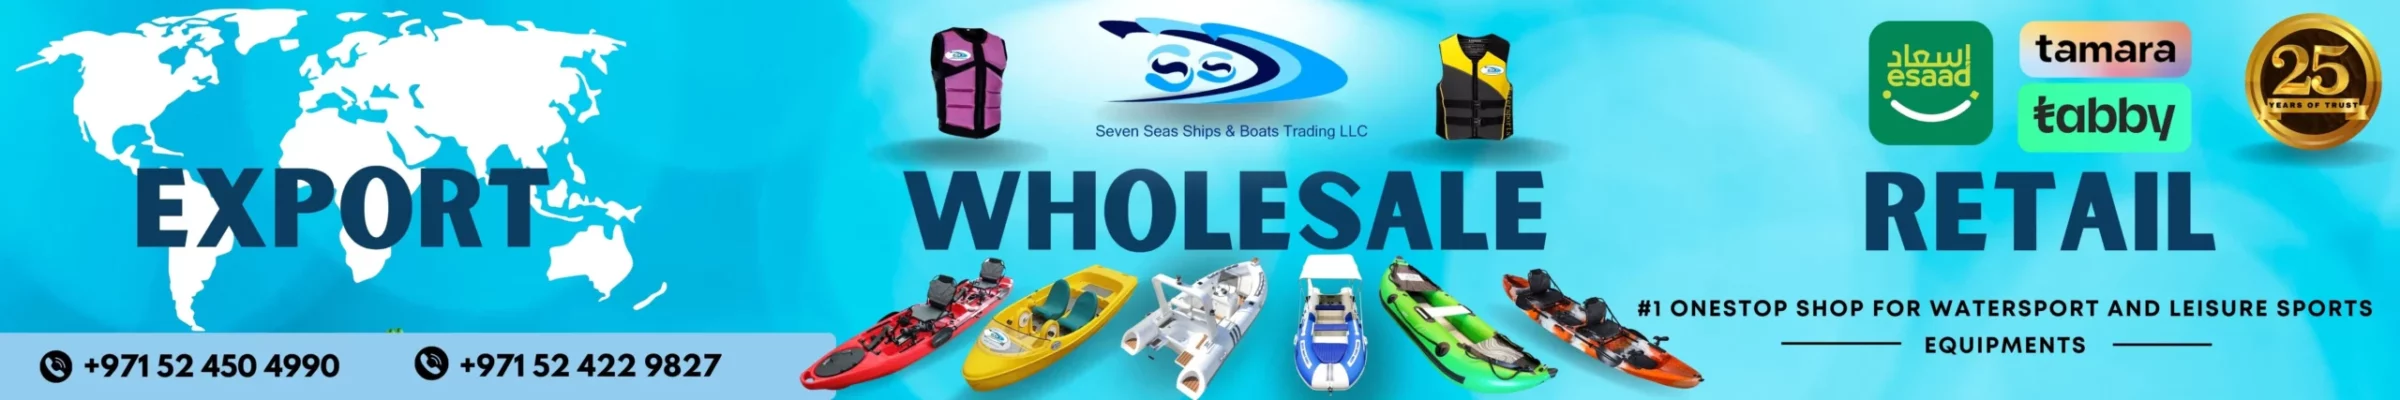 Seve Seas Web Site Main Banner